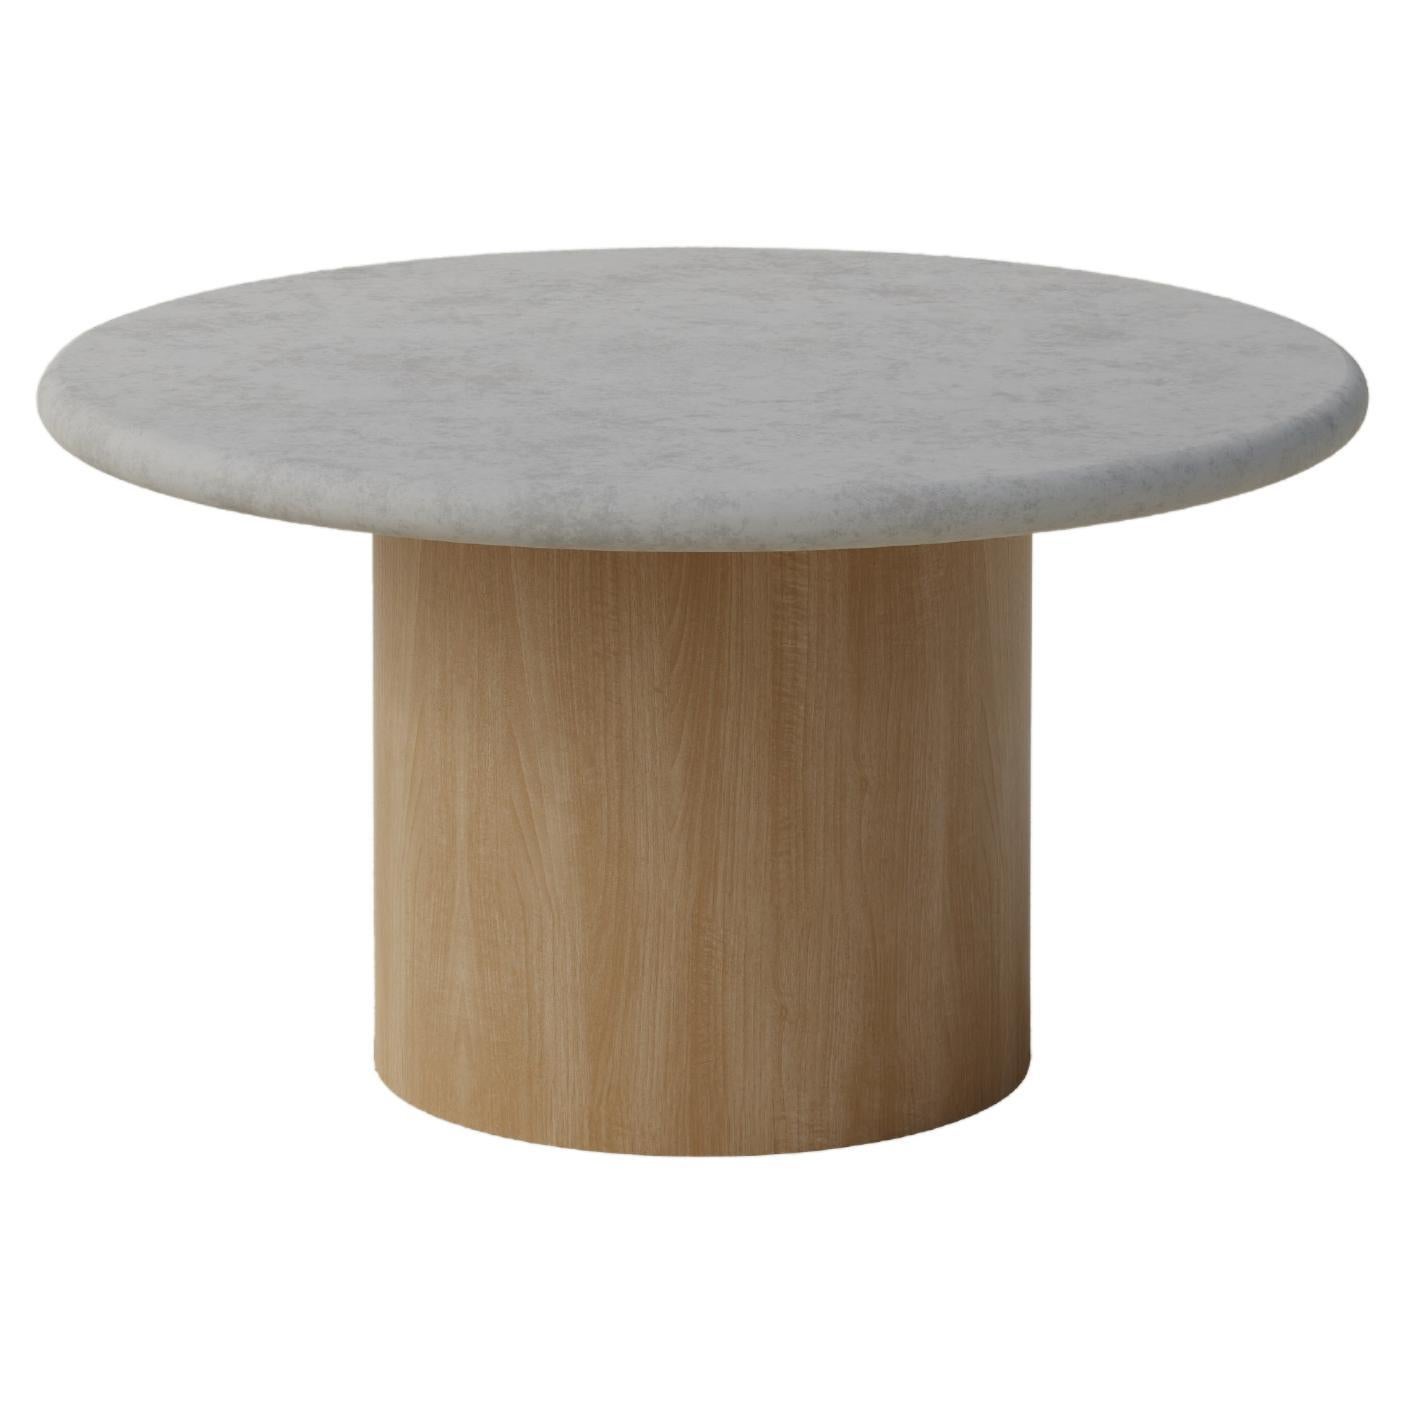 Raindrop Coffee Table, 600, Microcrete / Oak For Sale